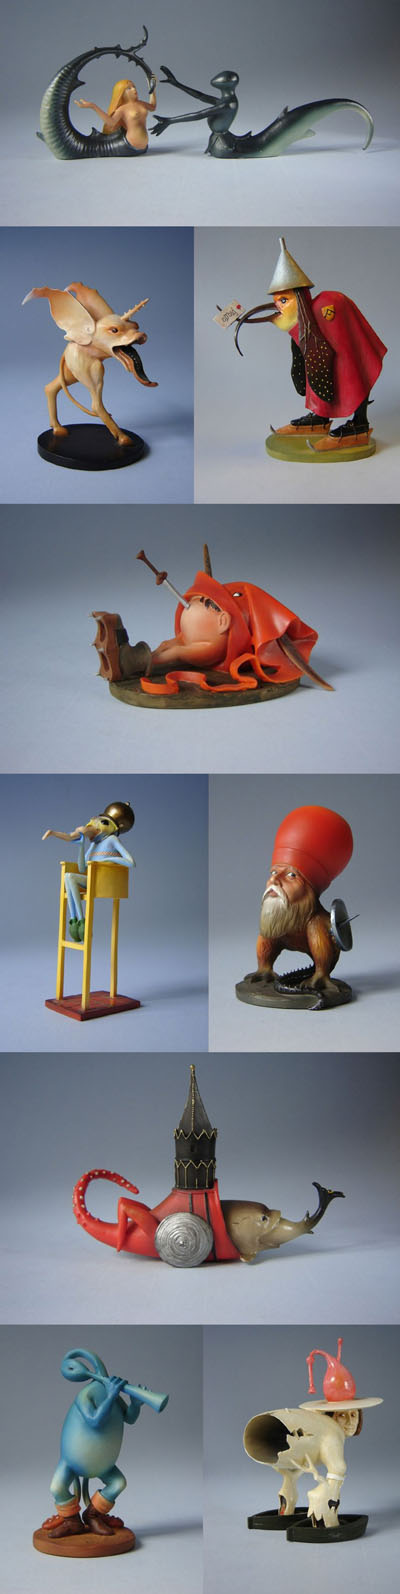 Eyeteeth: Incisive ideas: Hieronymus Bosch figurines